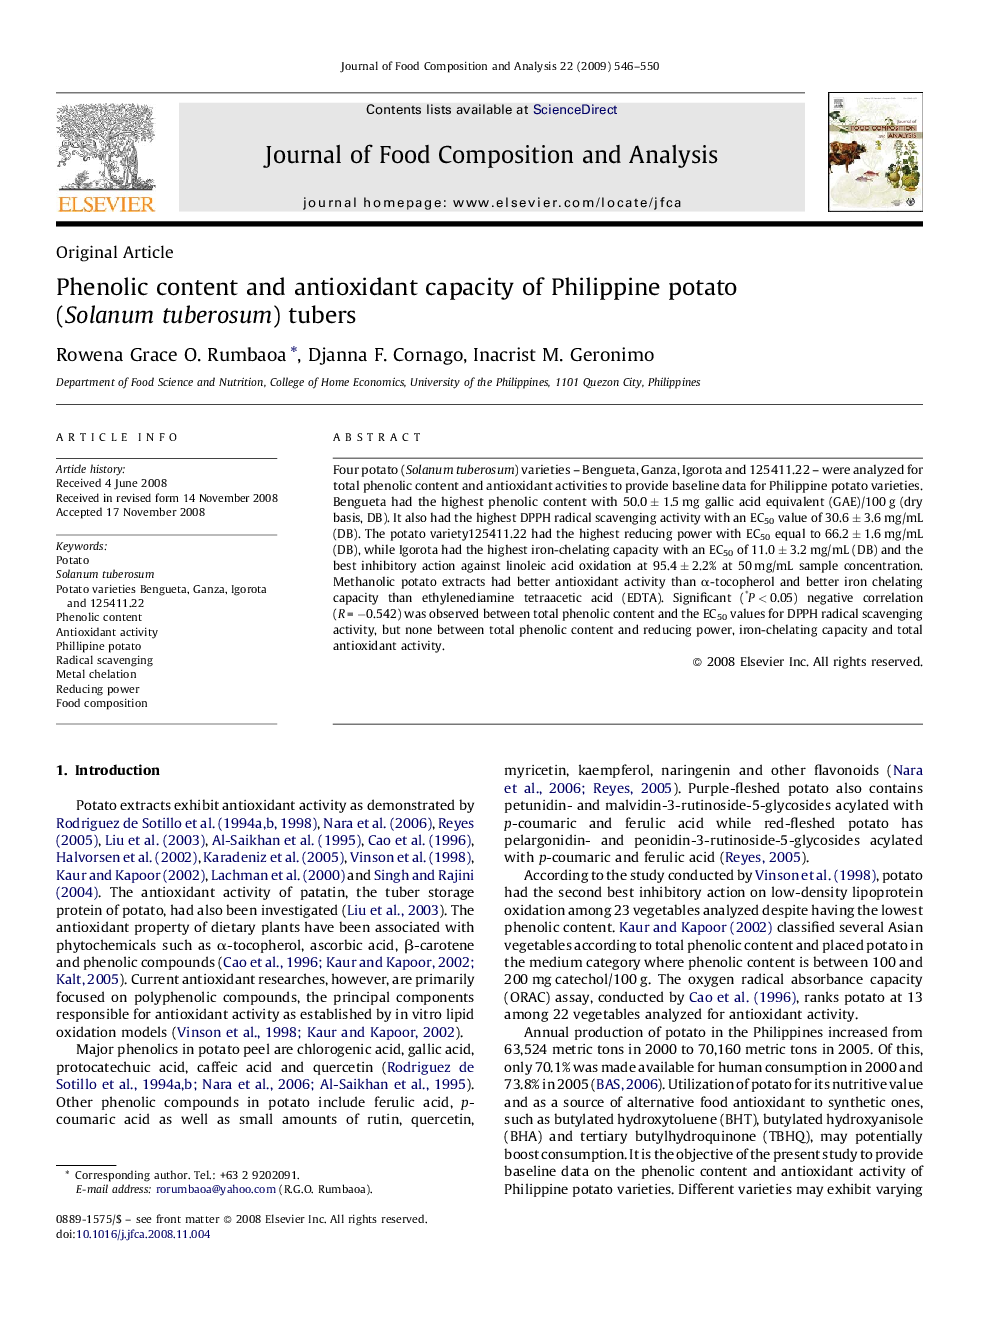 Phenolic content and antioxidant capacity of Philippine potato (Solanum tuberosum) tubers